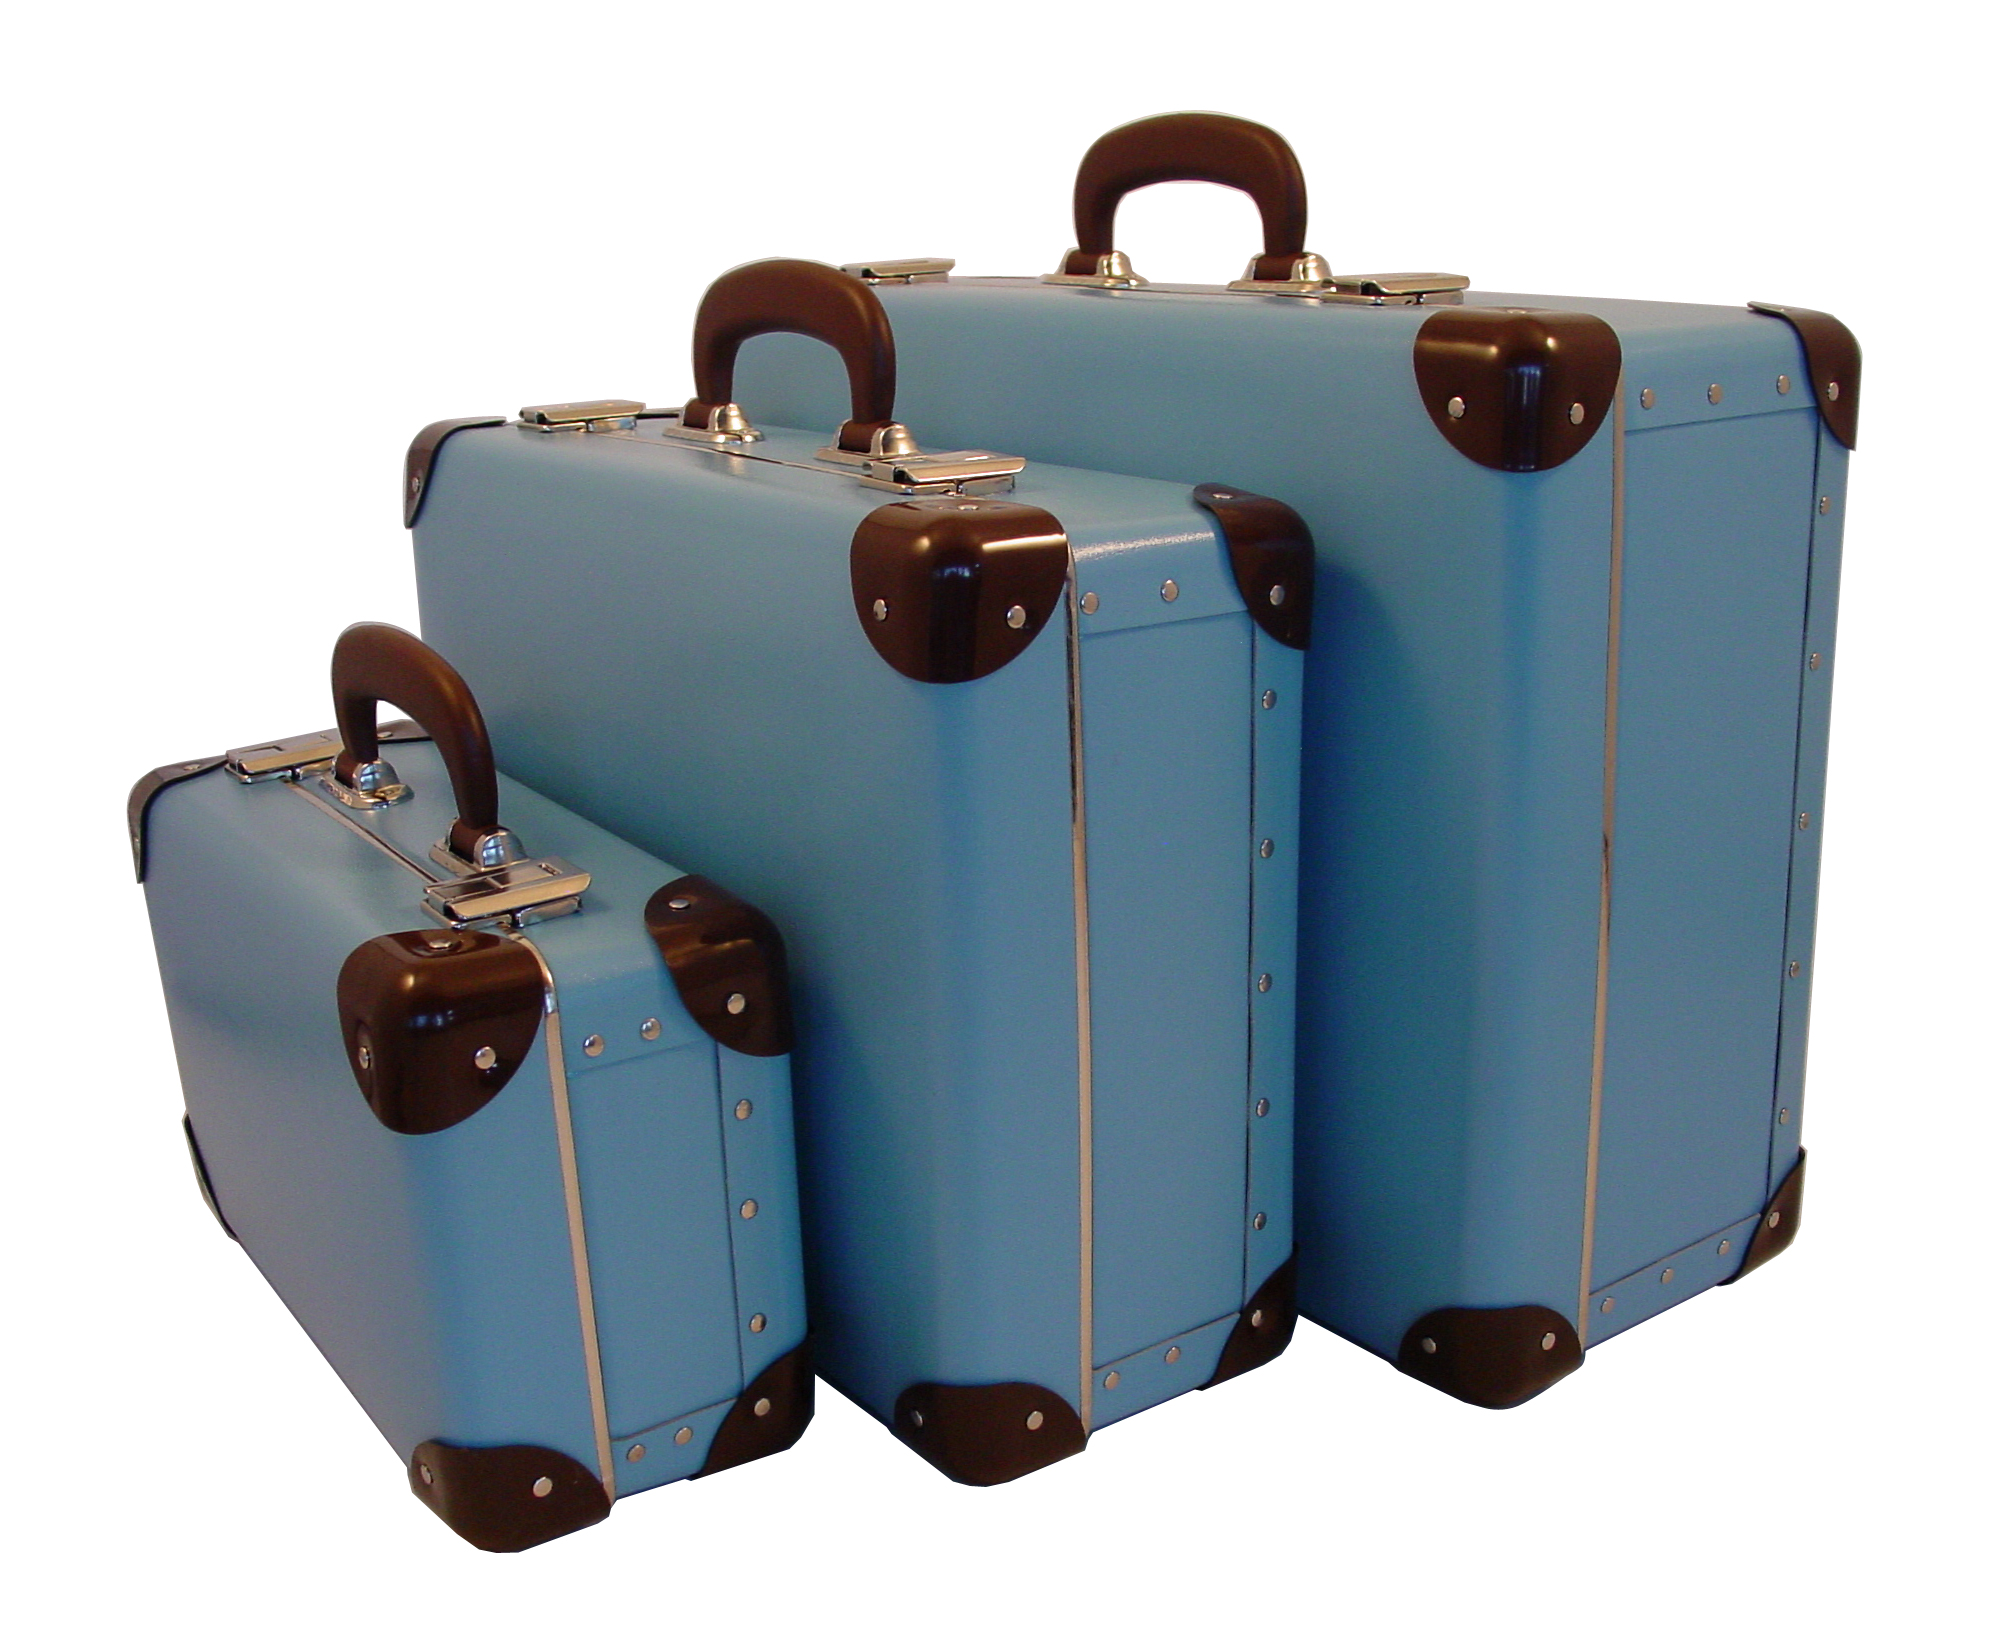 traveller brand suitcase